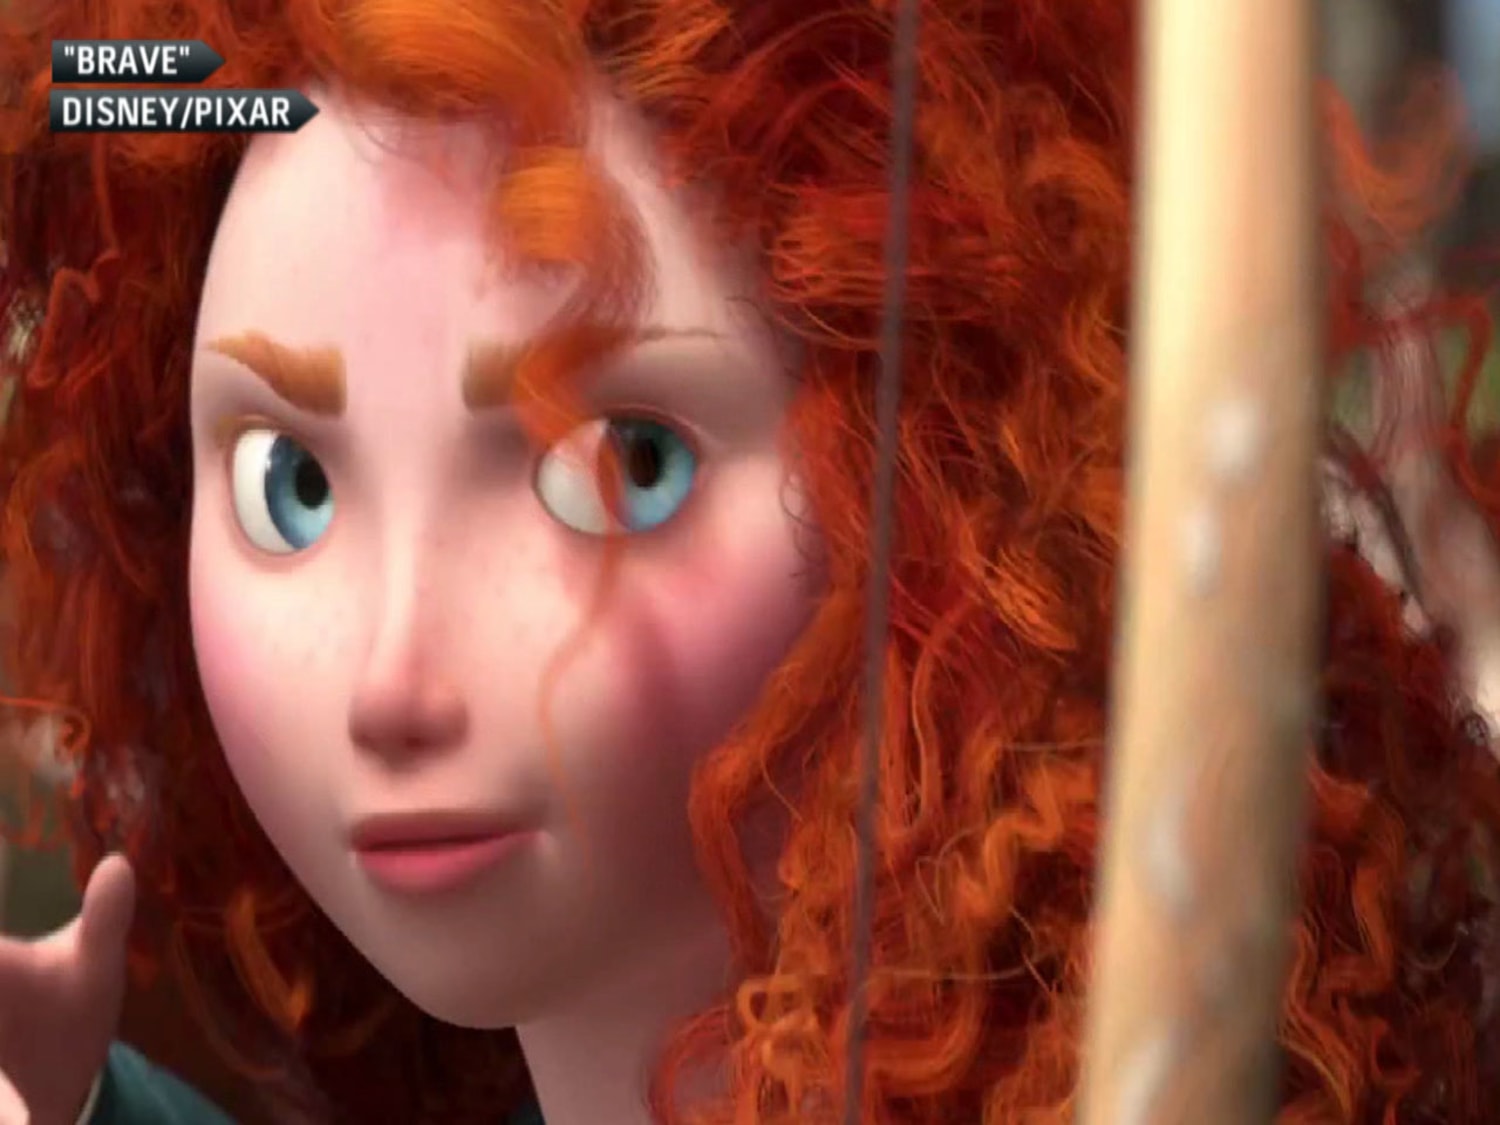 Brave' director takes aim at new depiction of heroine princess Merida